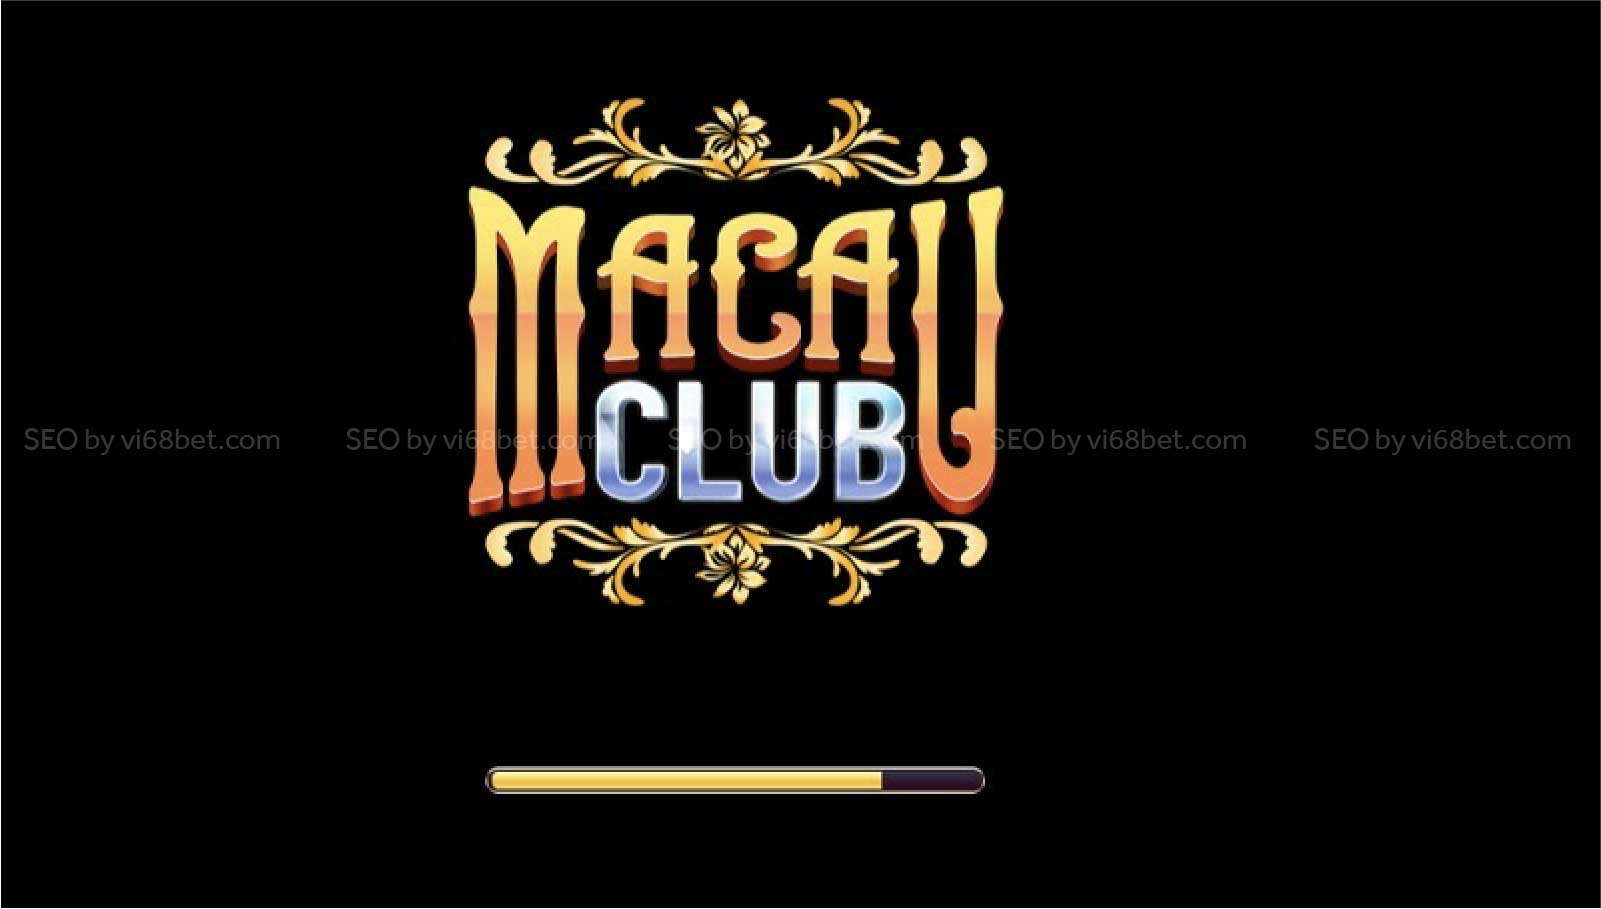 Macau Club